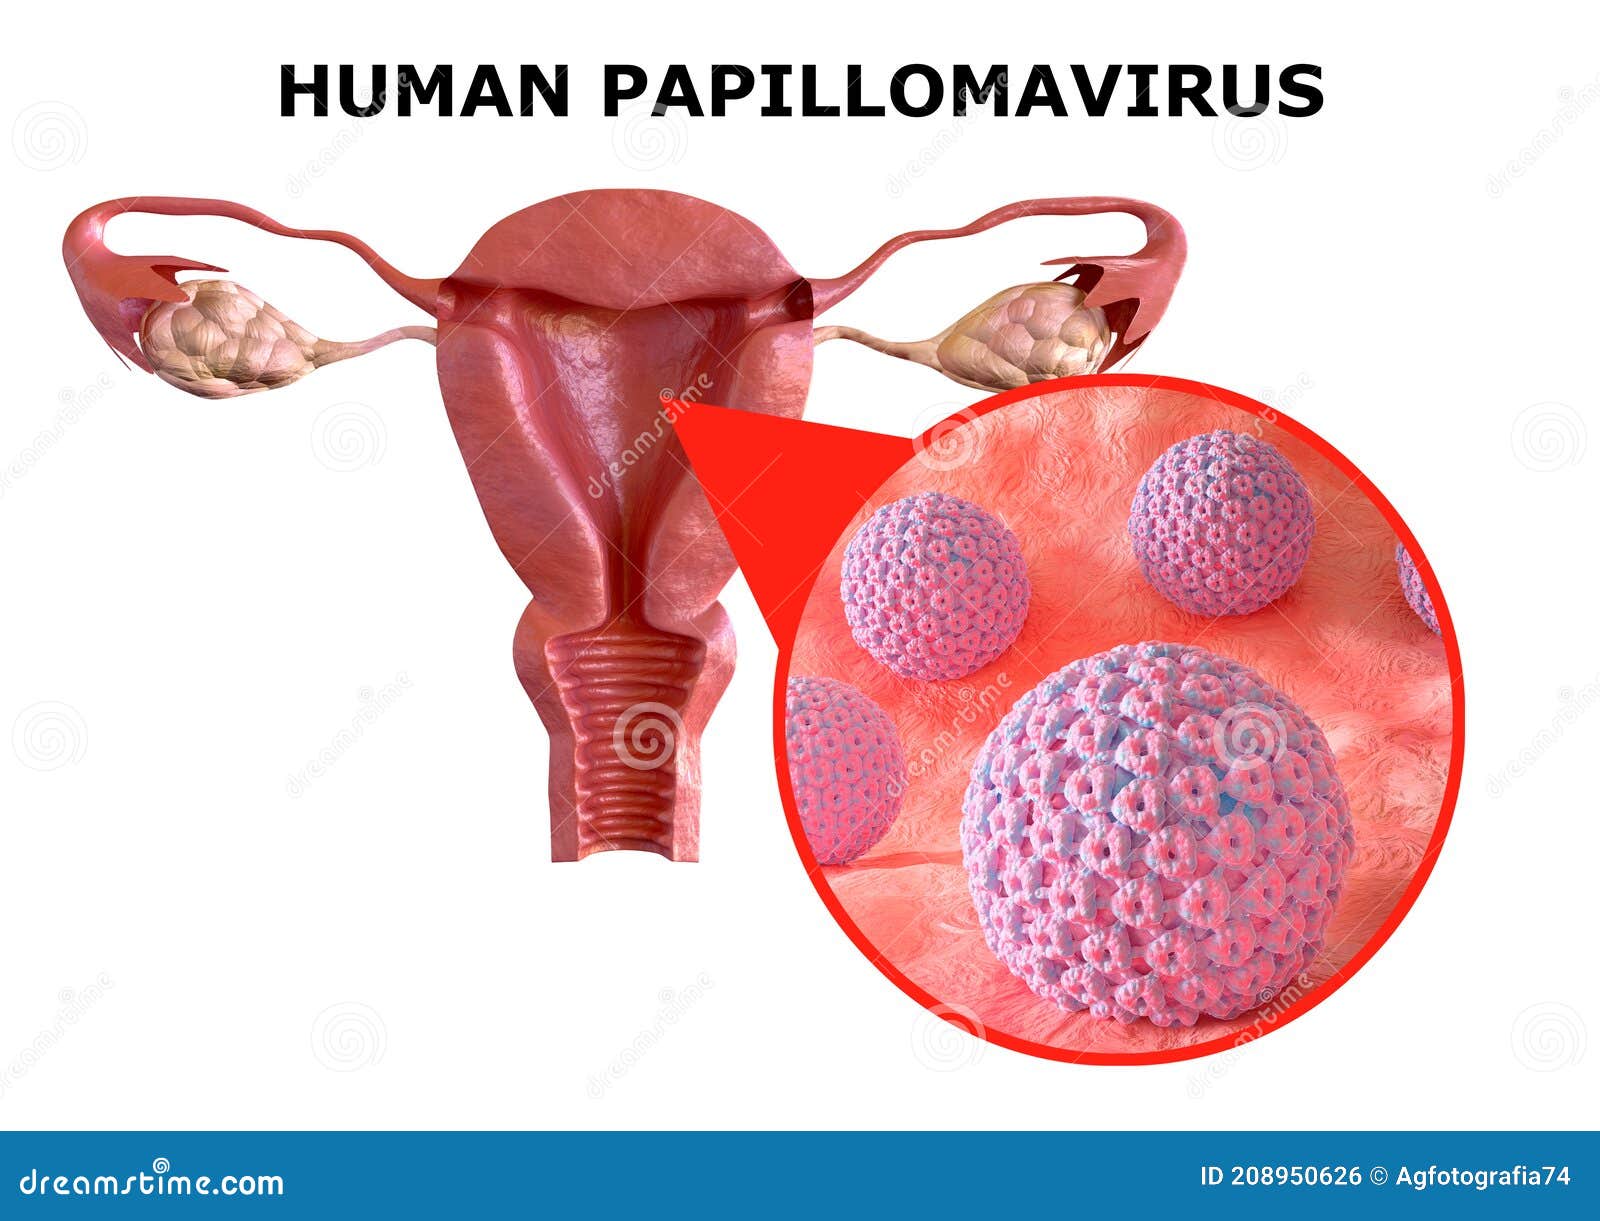 human papillomavirus hpv causes